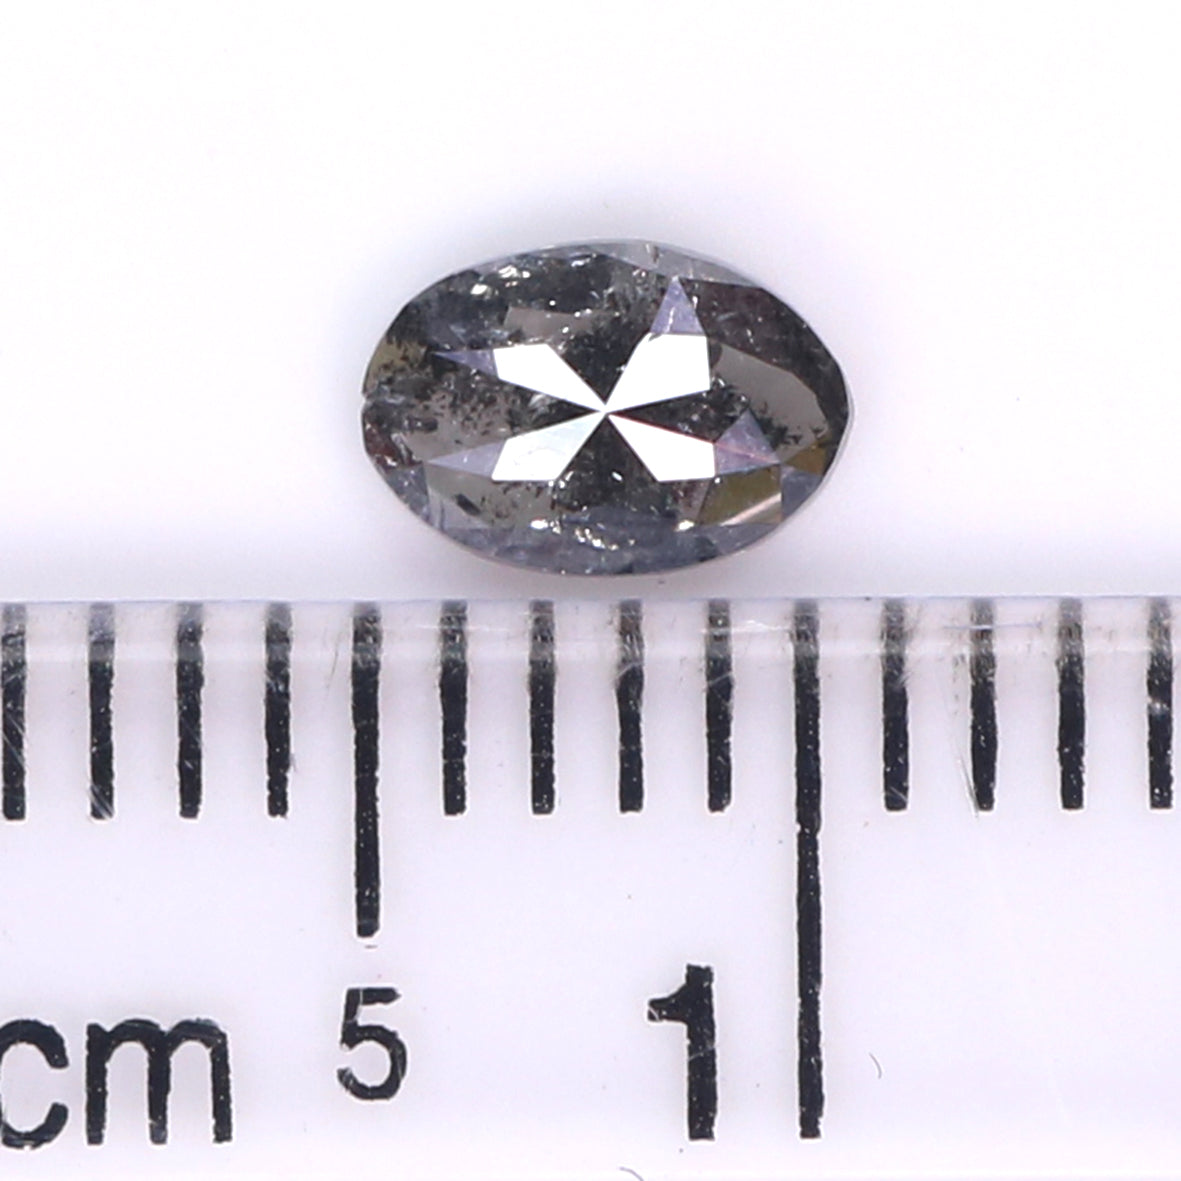 Natural Loose Oval Salt And Pepper Diamond Black Grey Color 0.36 CT 5.60 MM Oval Shape Rose Cut Diamond KR2484